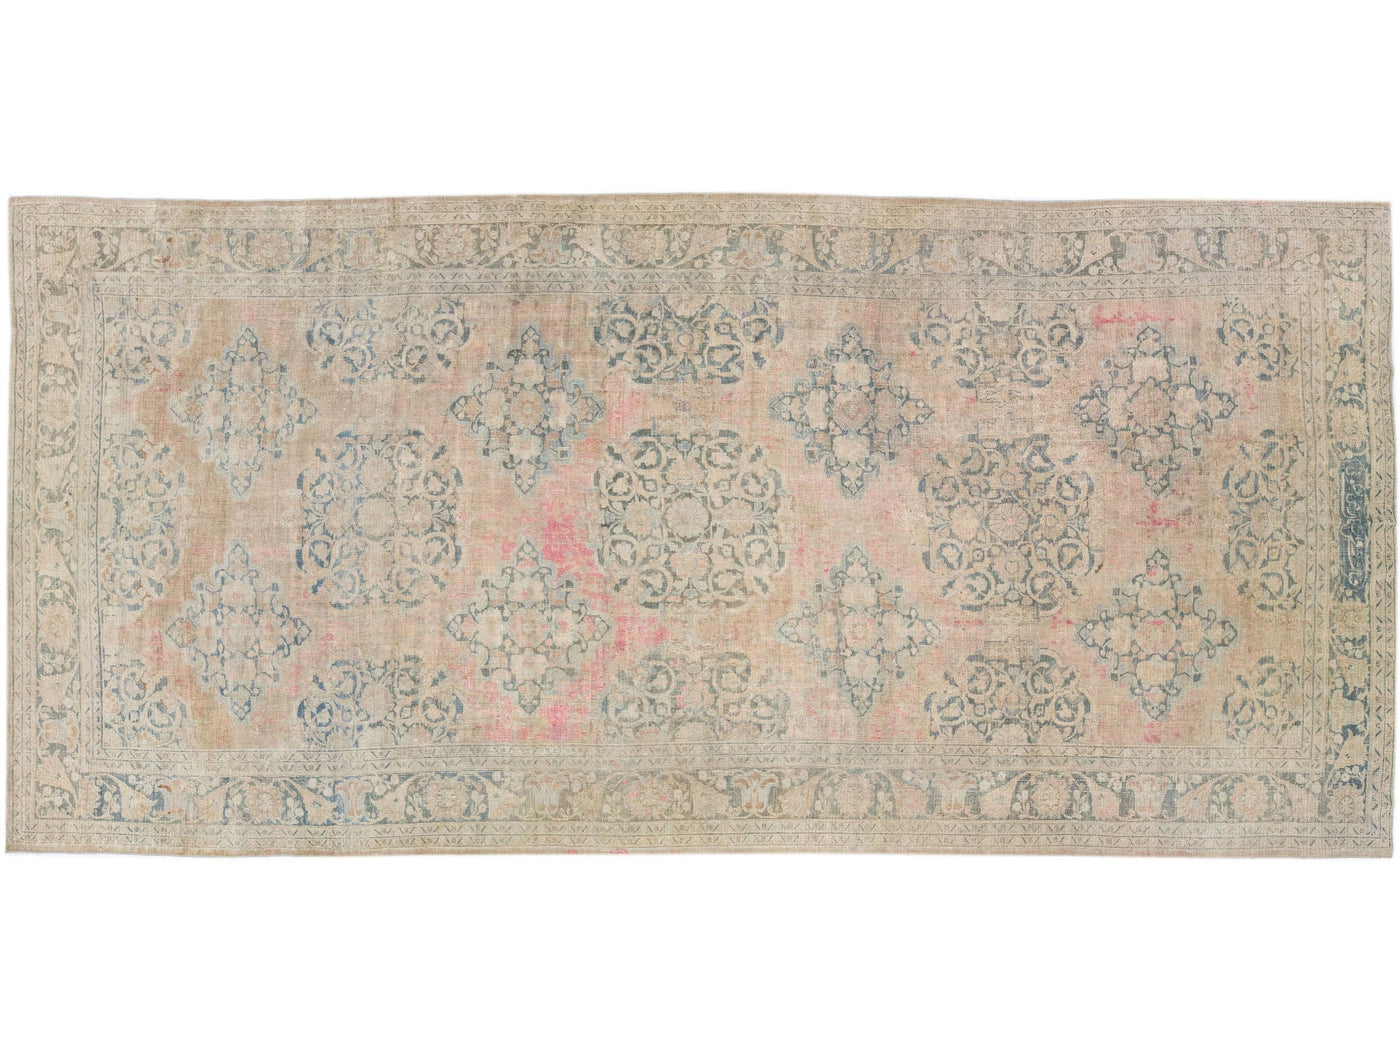 Antique Persian Doroksh Handmade Beige & Pink Wool Rug with Floral Pattern